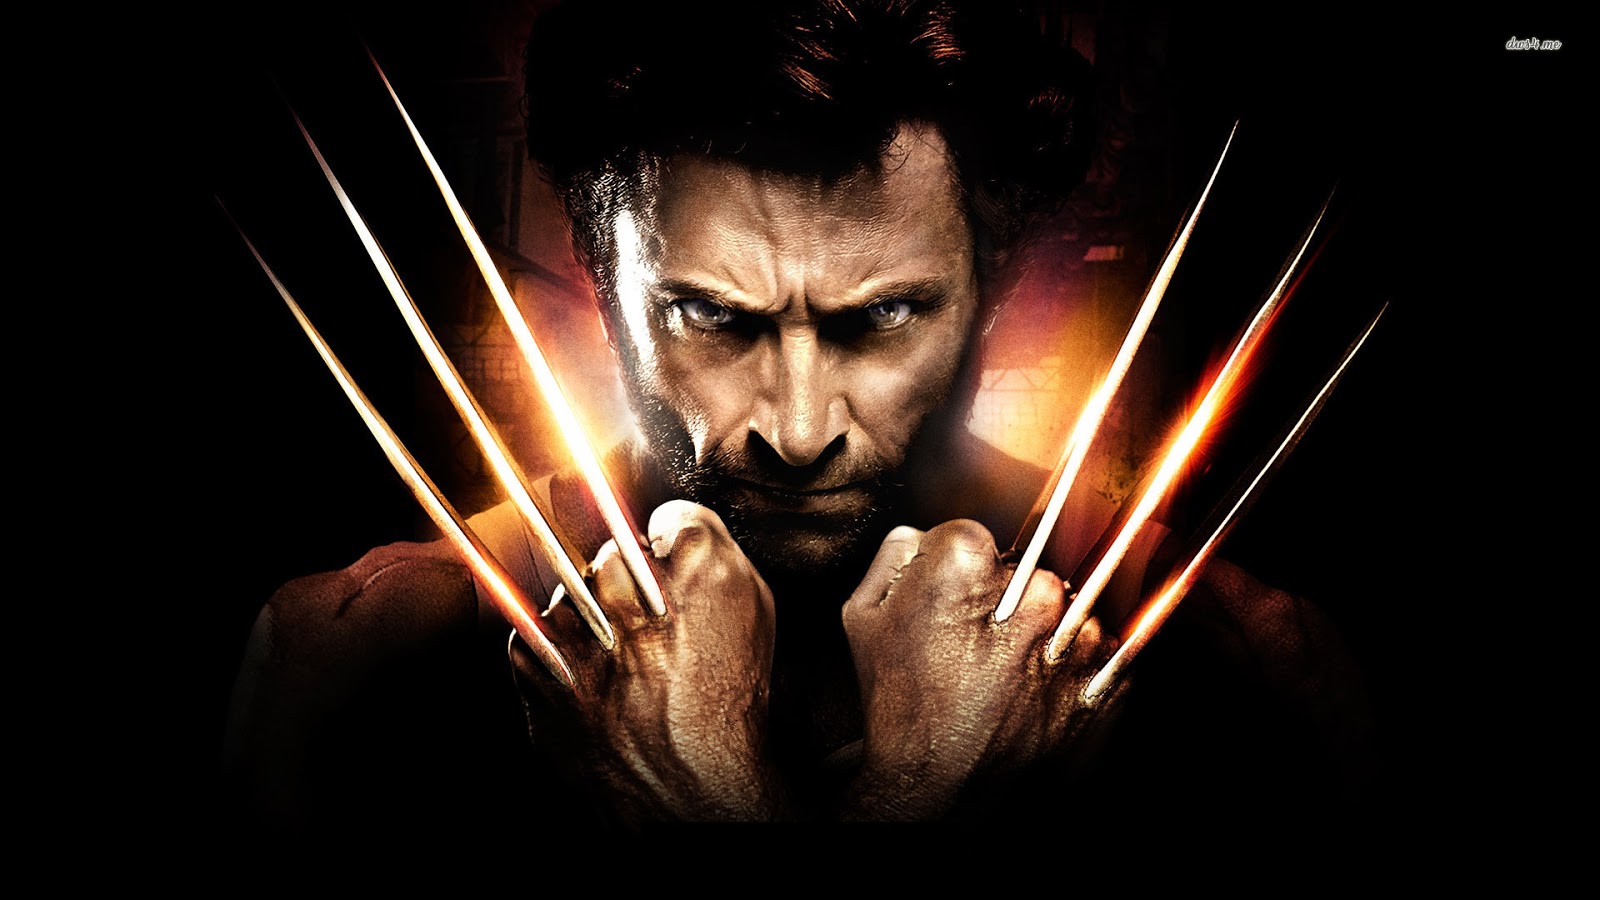 X-Man Wolverine 2 Full High Definition Wallpaper Free ...